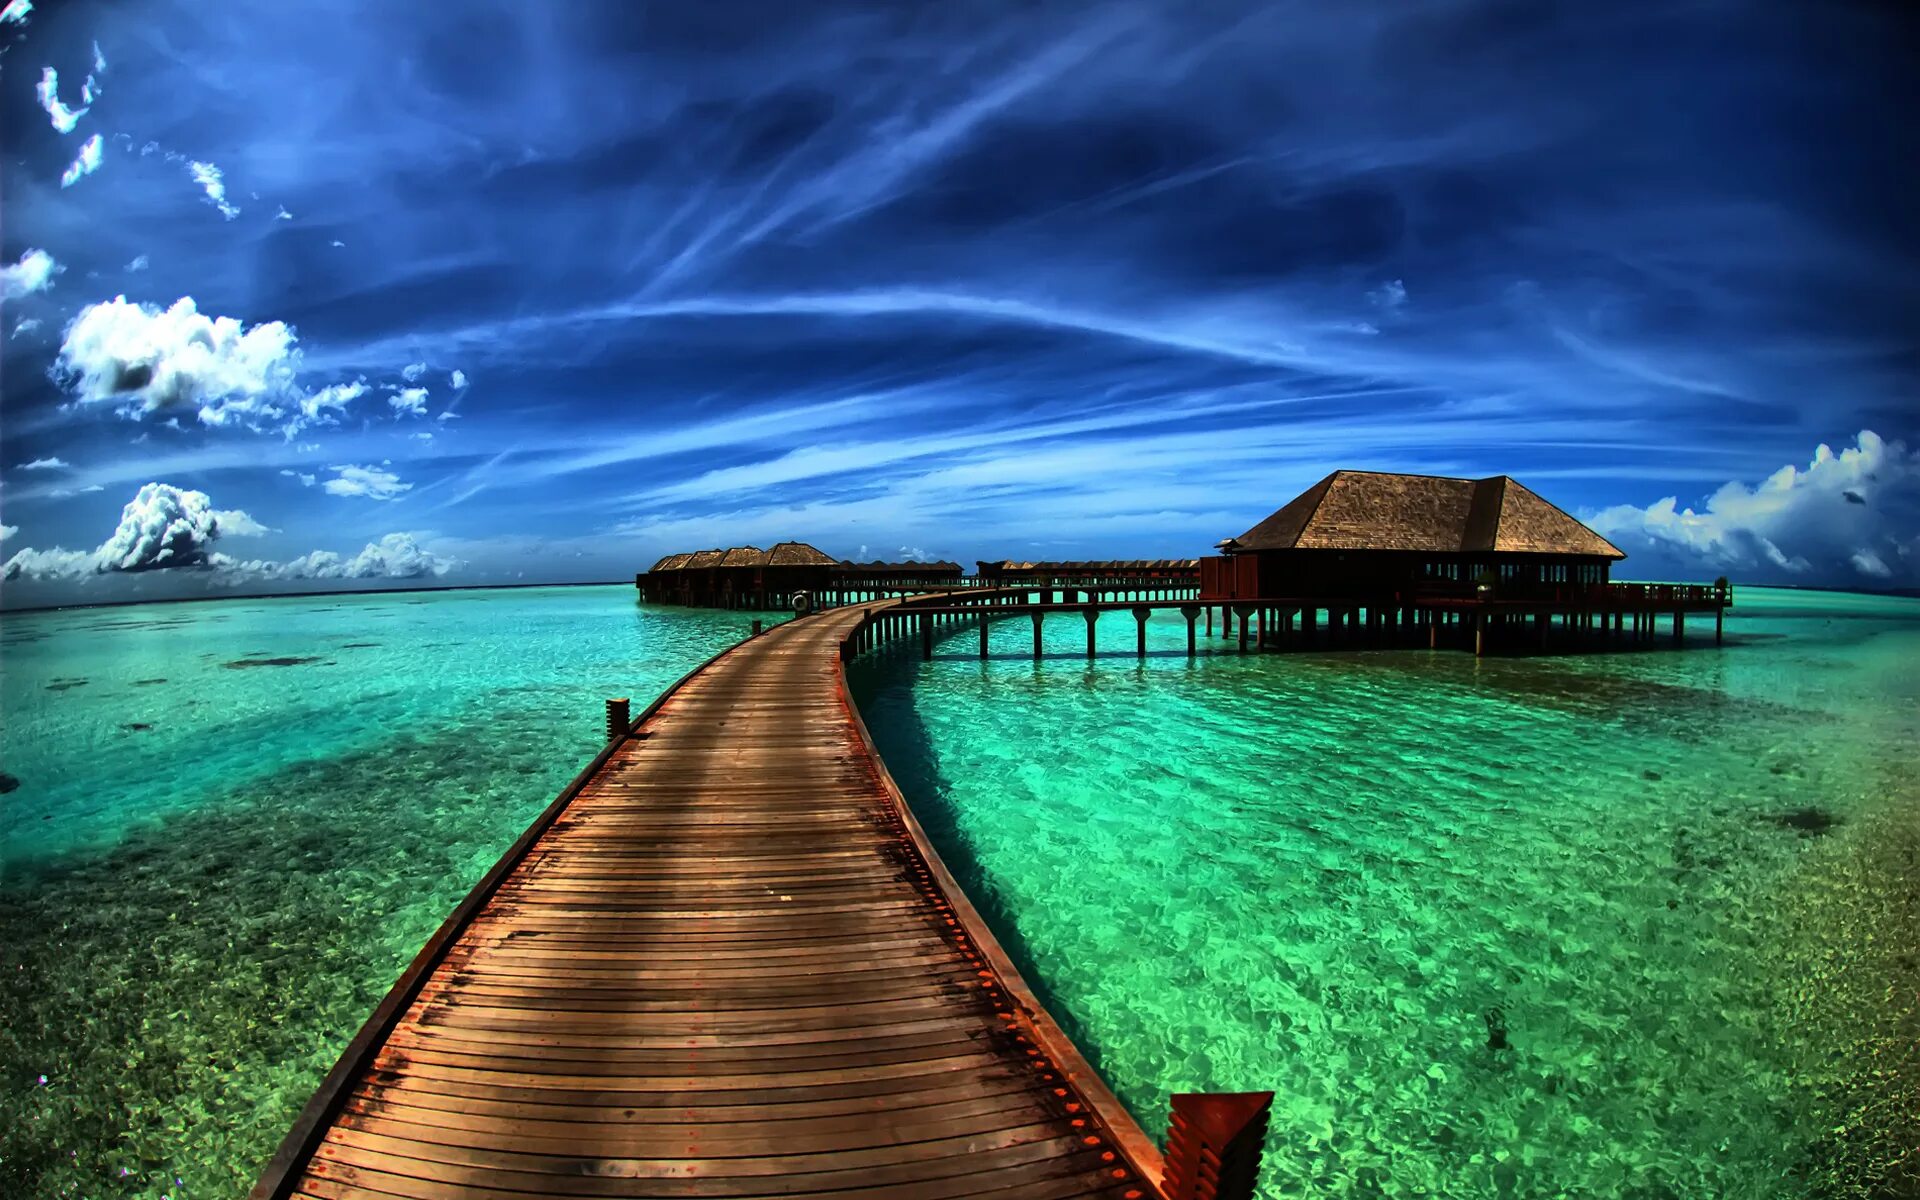 Картинки на обои. Бора Бора. Мальдивы бунгало Пирс. Природа море. Море пляж.